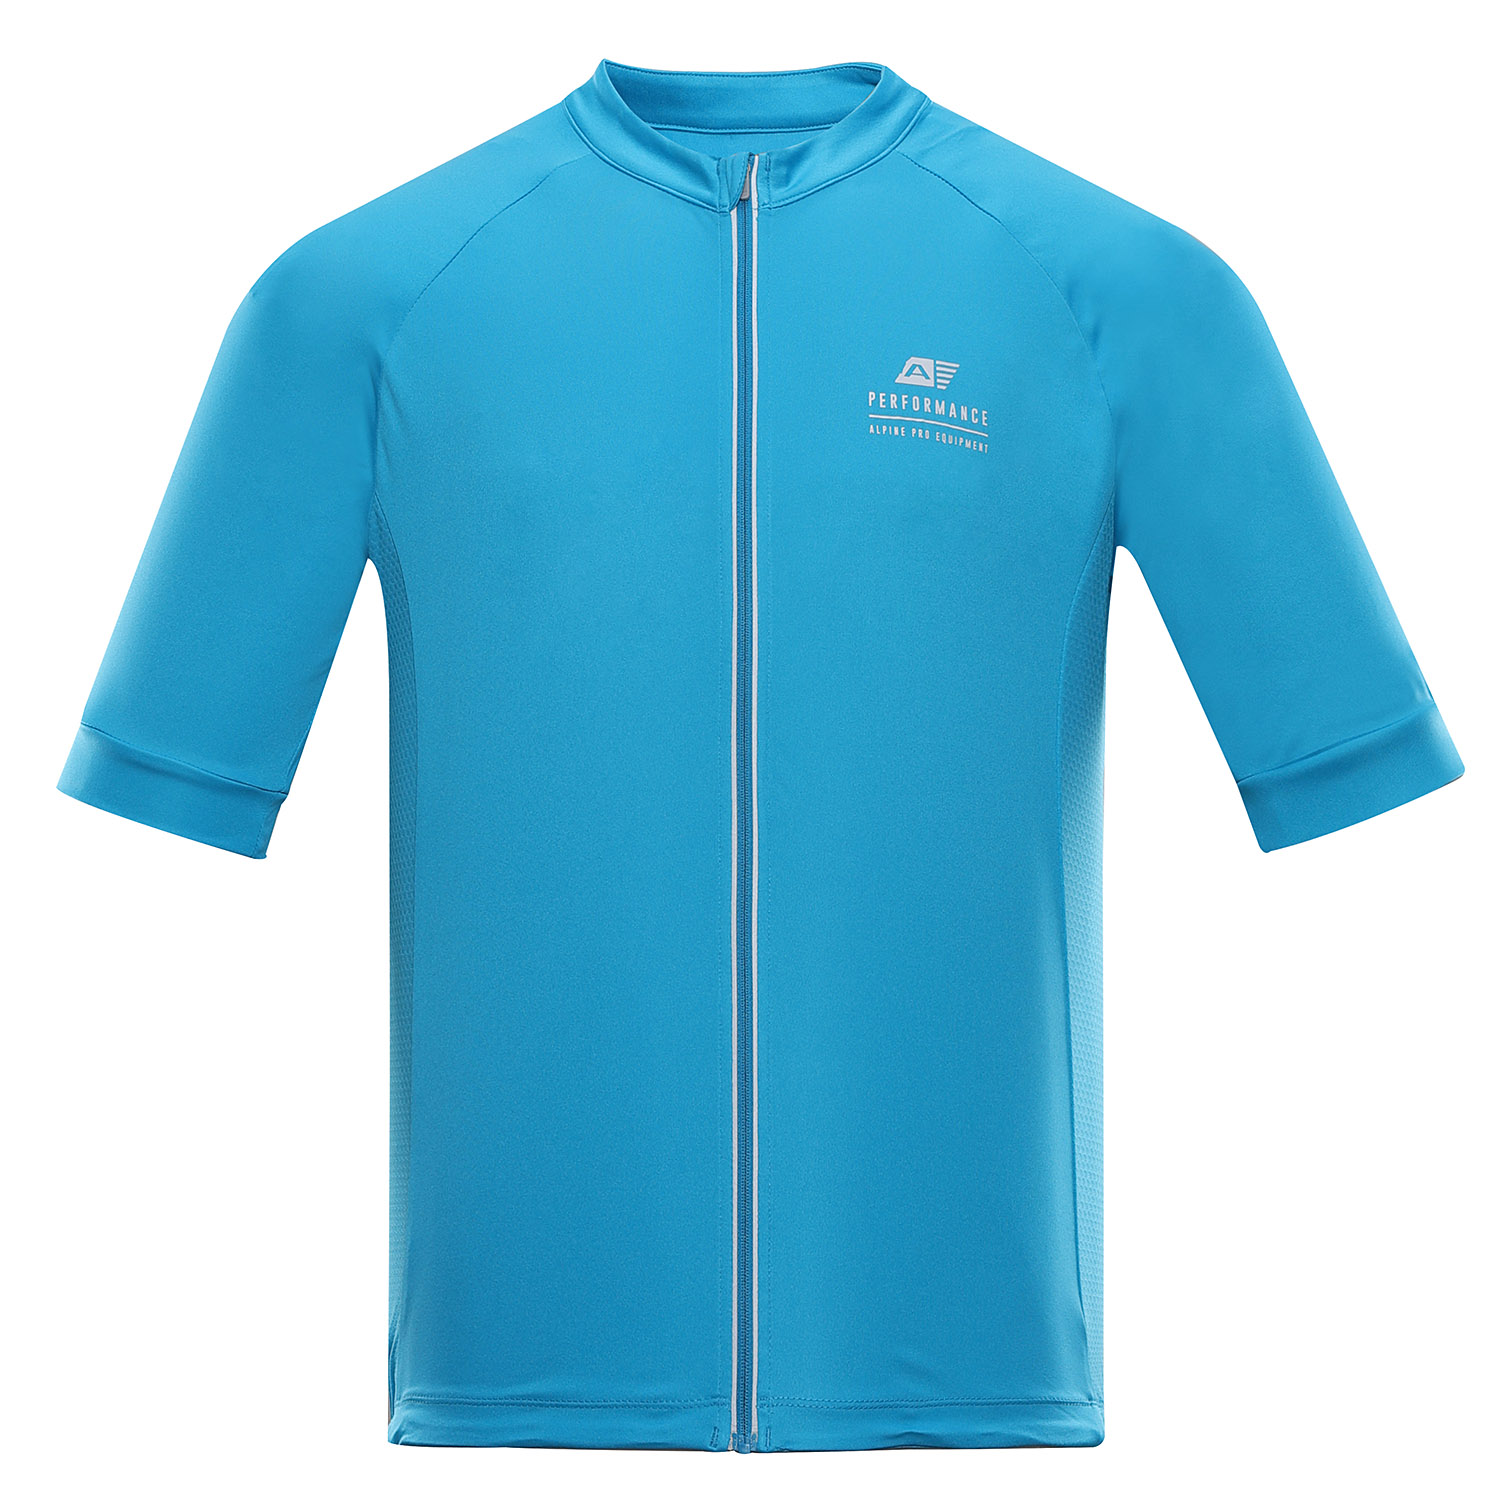 Men's cycling jersey ALPINE PRO SAGEN neon atomic blue